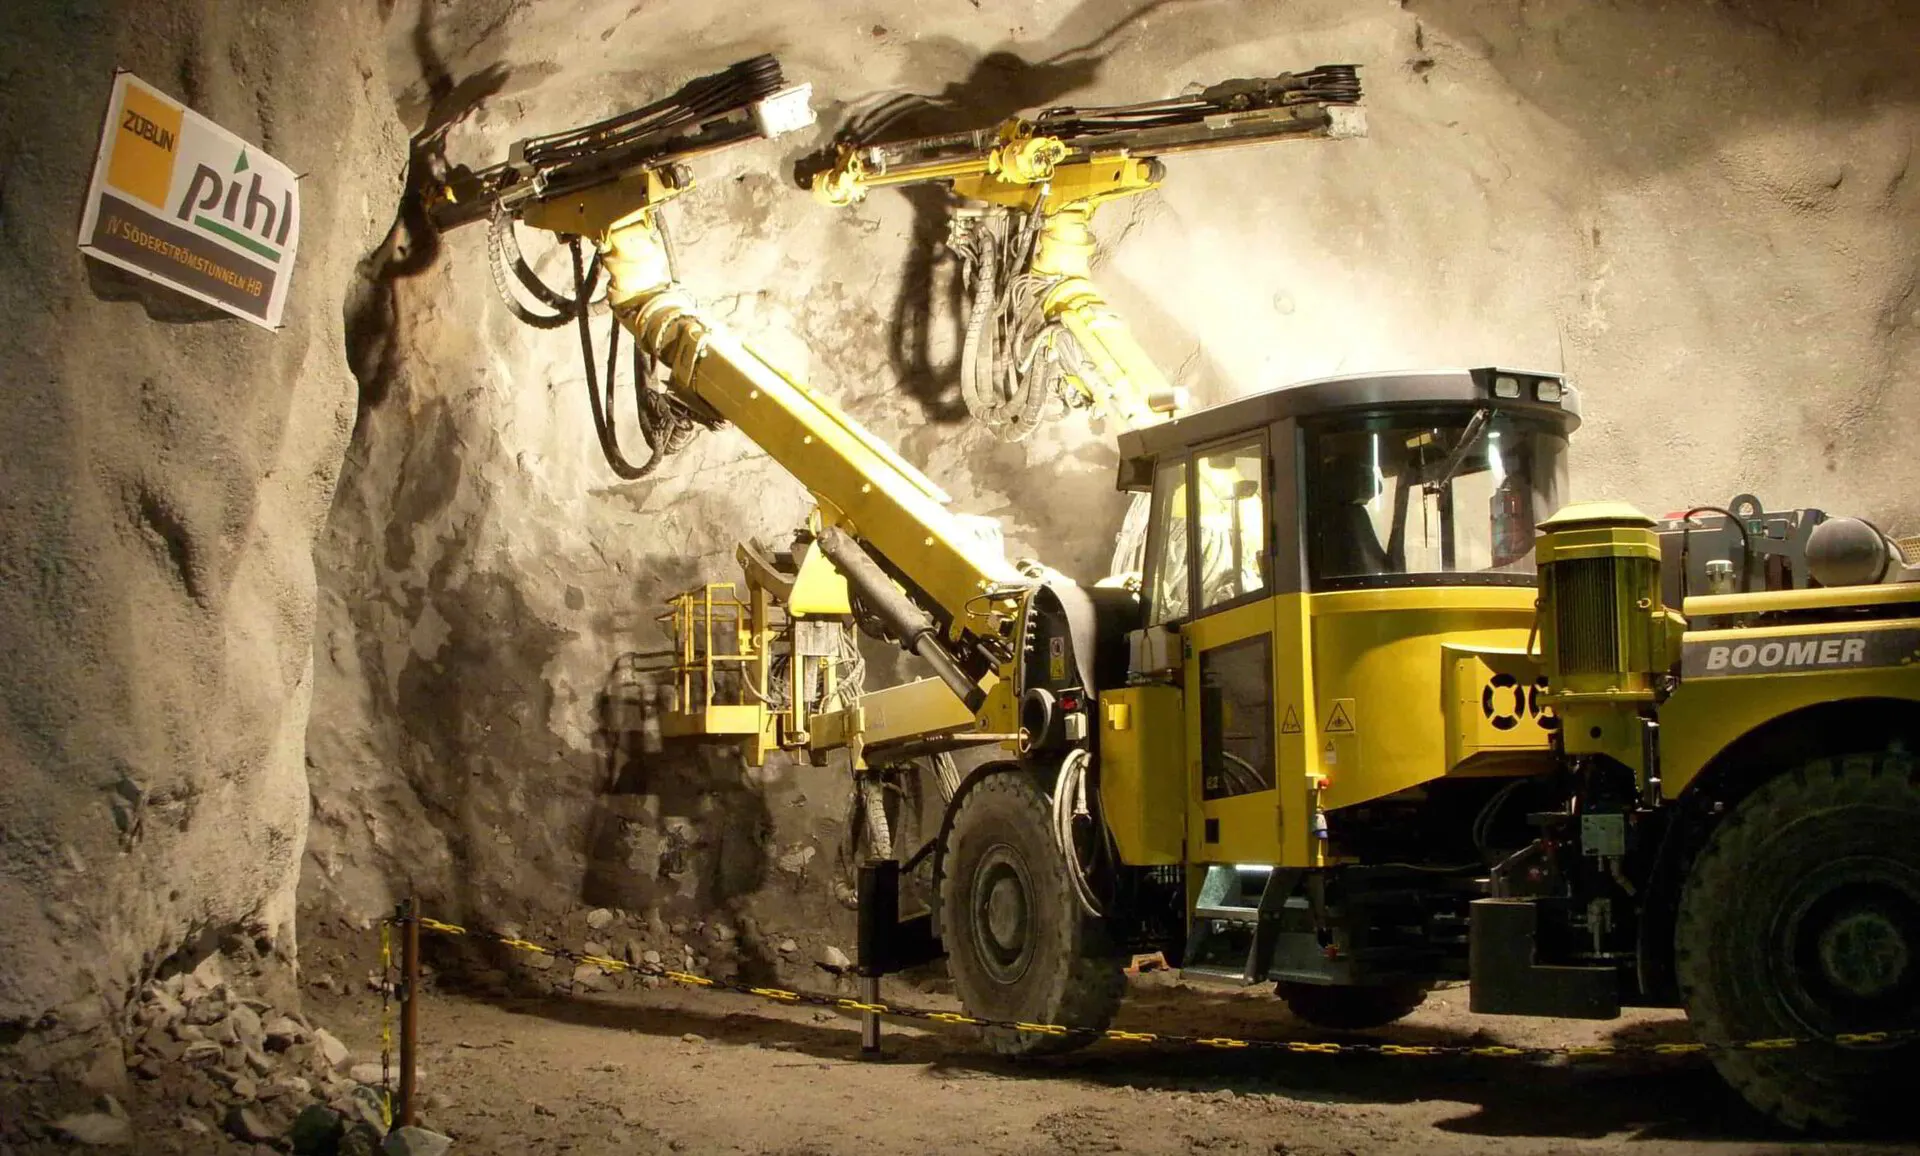 Jumbo Drill using rock drills in an underground mine